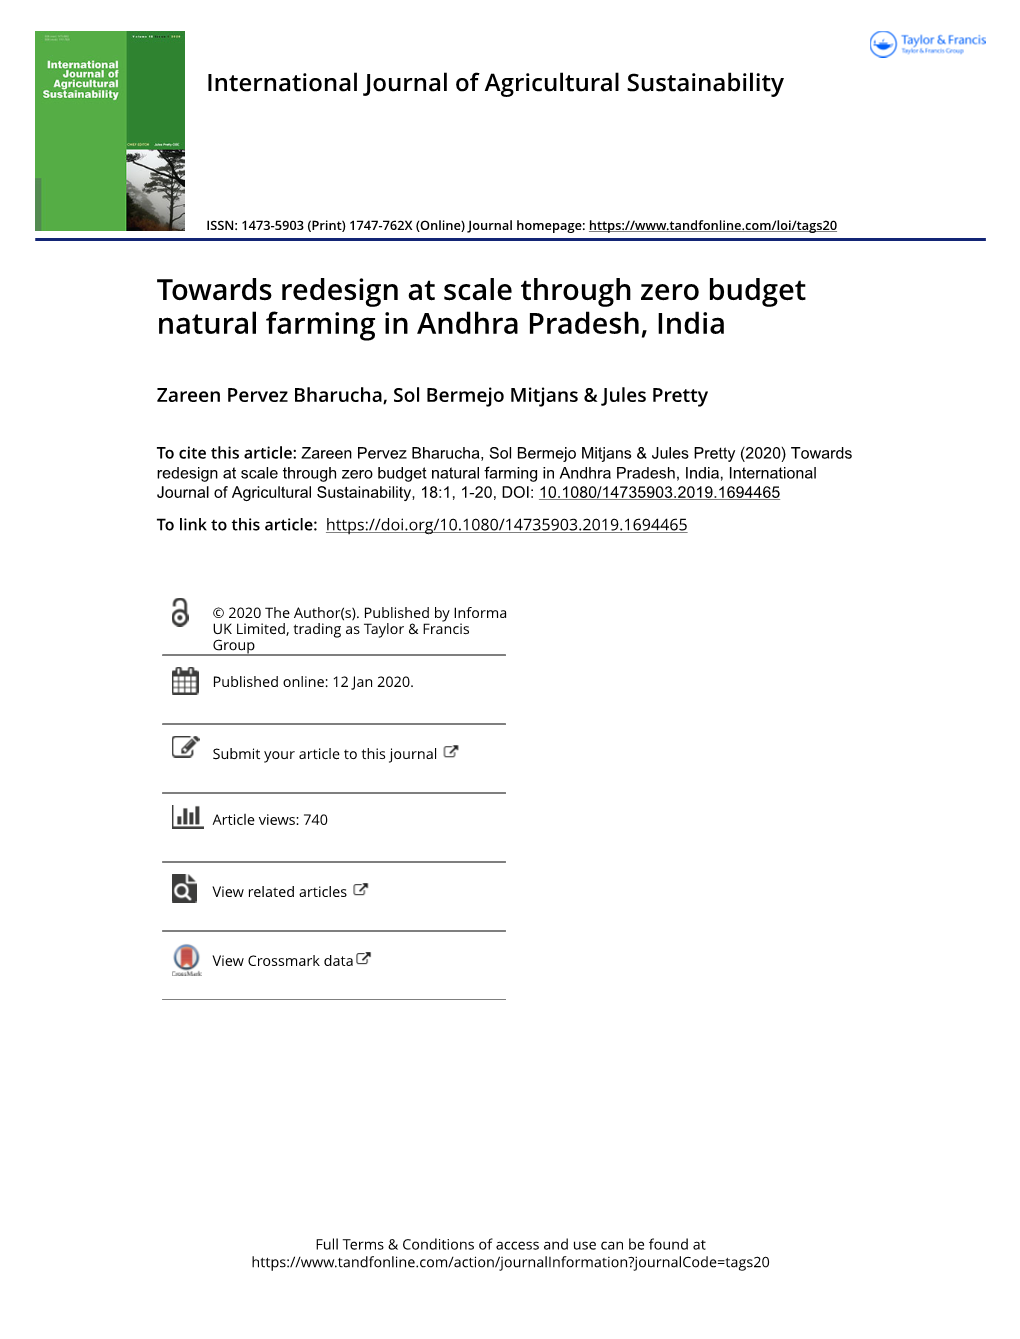 Towards Redesign at Scale Through Zero Budget Natural Farming in Andhra Pradesh, India